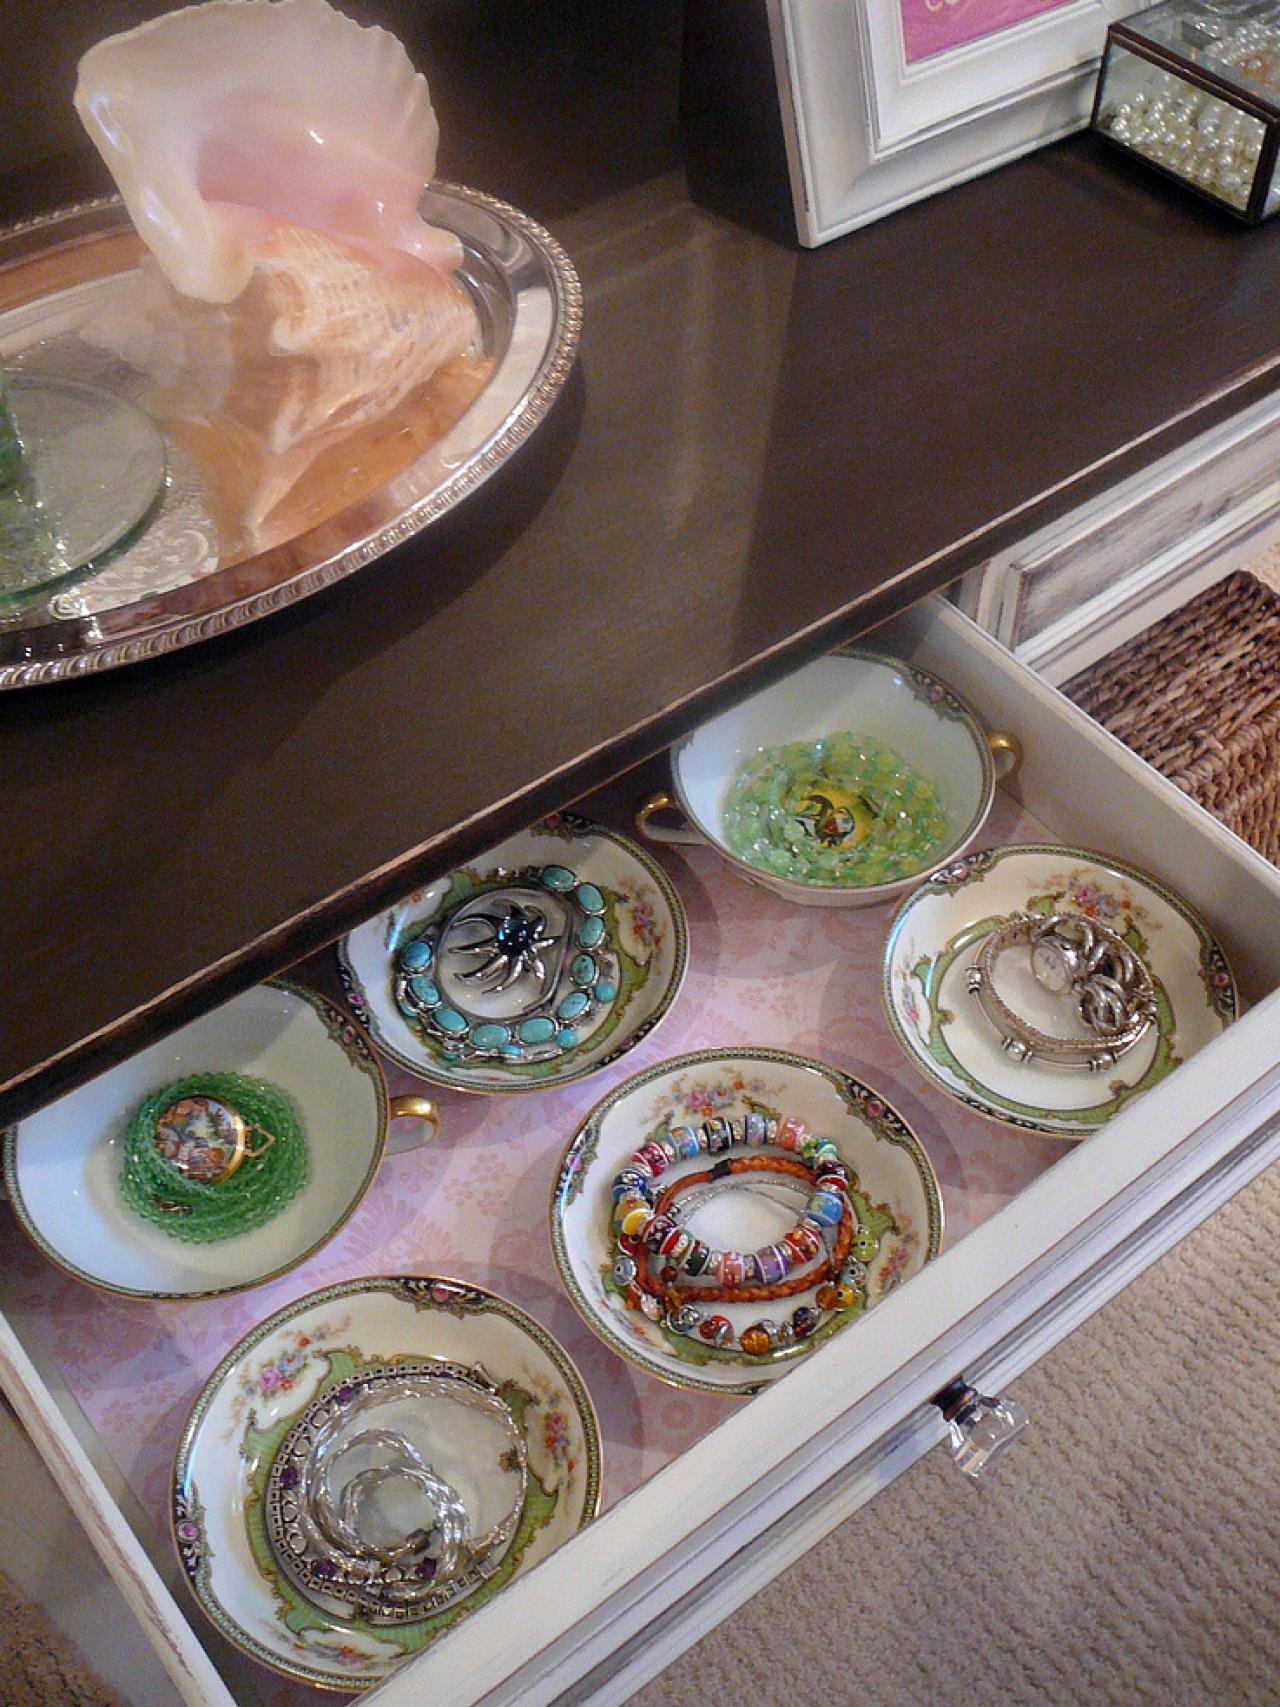 Original lynda quintero davids teacup drawer jewelry organizer s3x4.jpg.rend.hgtvcom.1280.1707